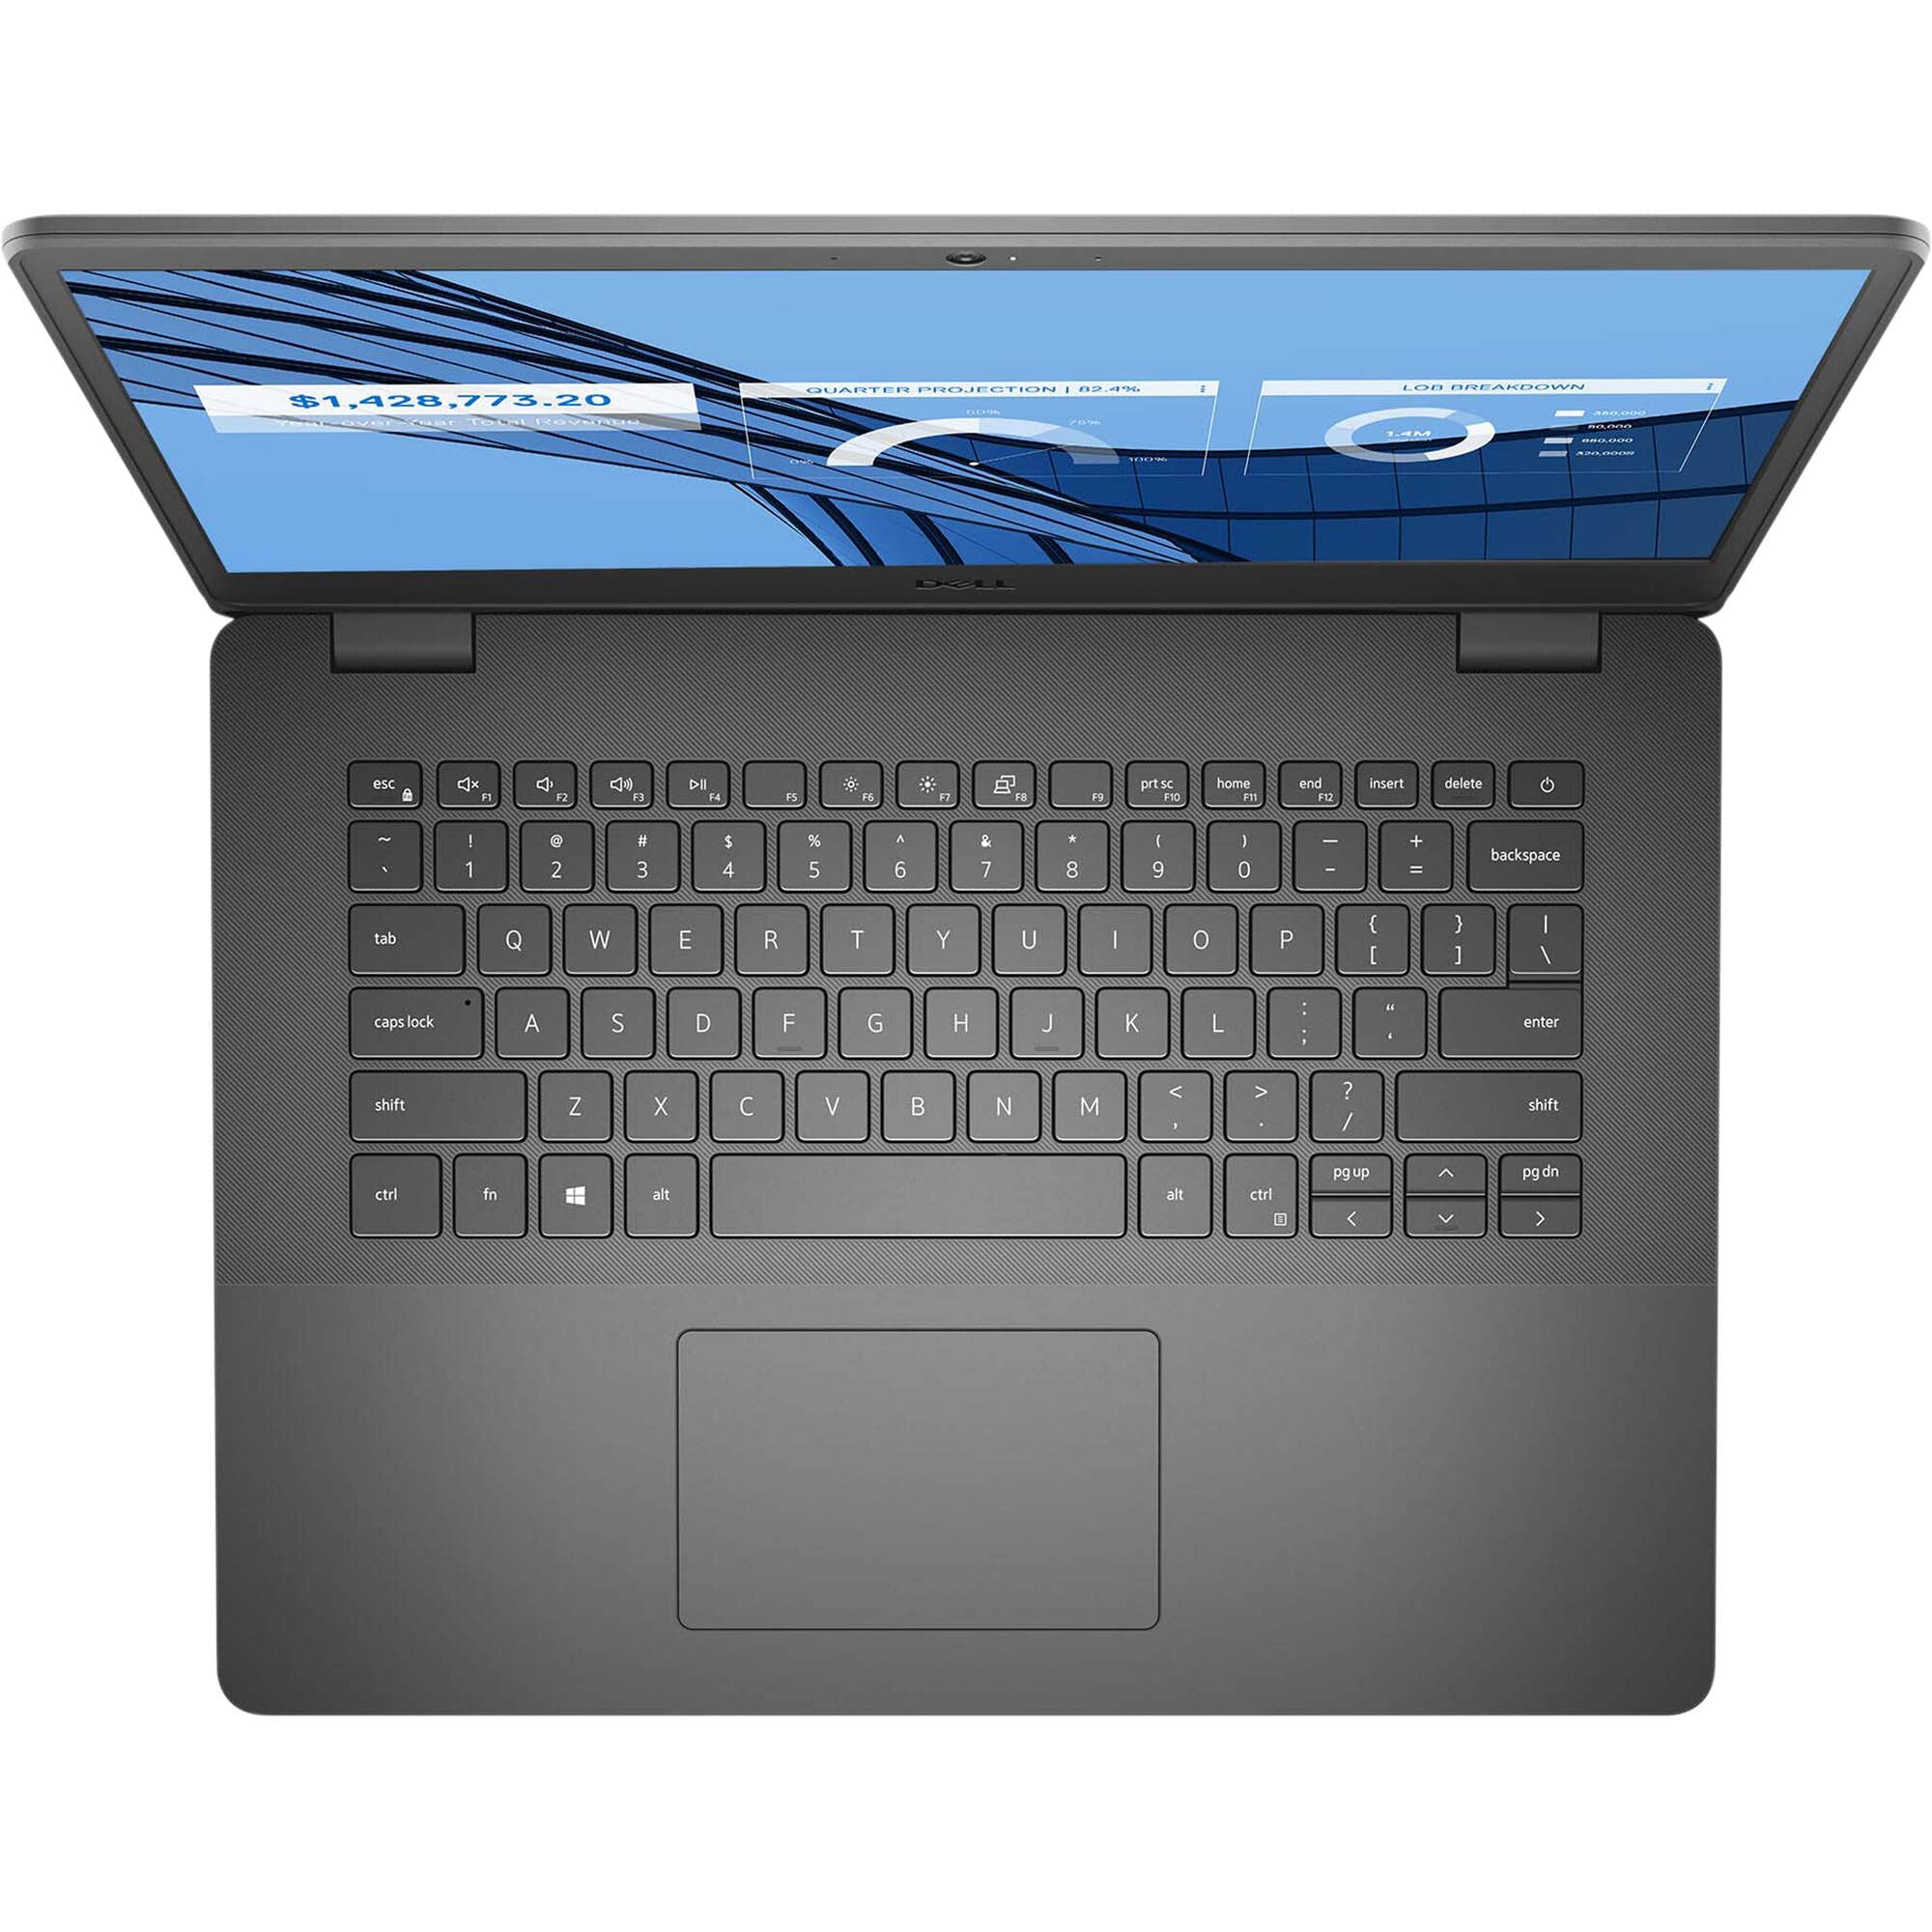 Dell Vostro 14 3400 Business Laptop Computer, 14" FHD Anti-Glare, Intel Quad-Core i5-1135G7 (Beat i7-1065G7), 8GB DDR4 RAM, 256GB PCIe SSD + 1TB HDD, 802.11AC WiFi, Bluetooth, Webcam, Windows 11 Pro